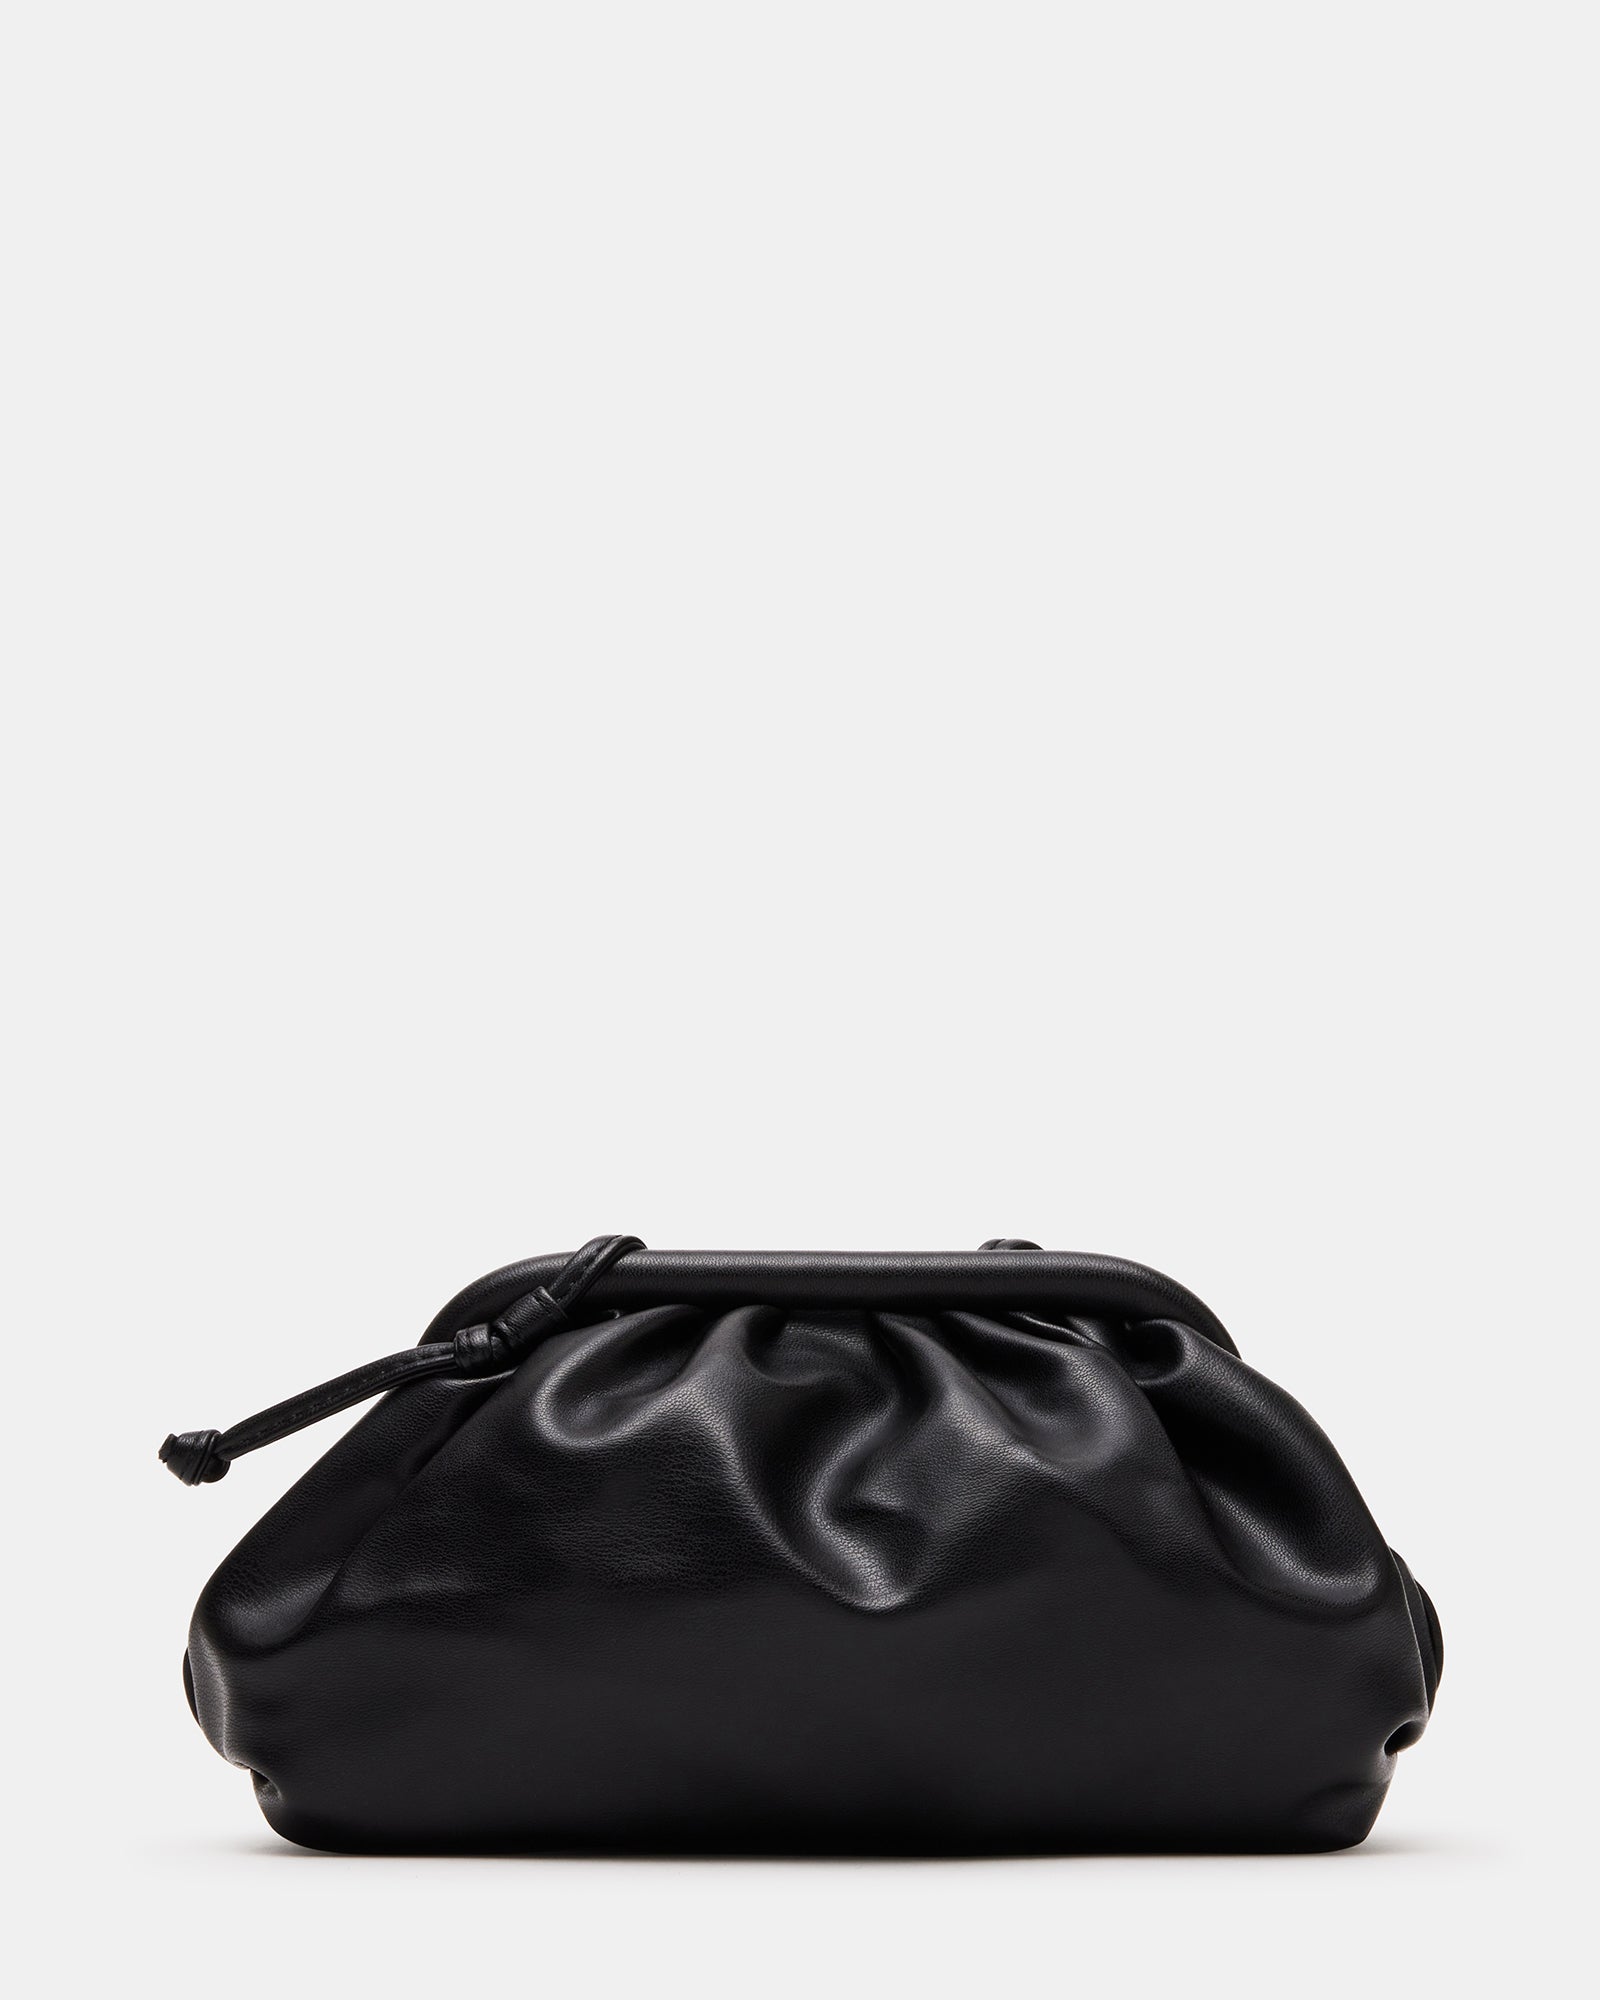 Steve Madden studded teal purse tj maxx  Designer bags sale, Leather  crossbody bag small, Purses crossbody